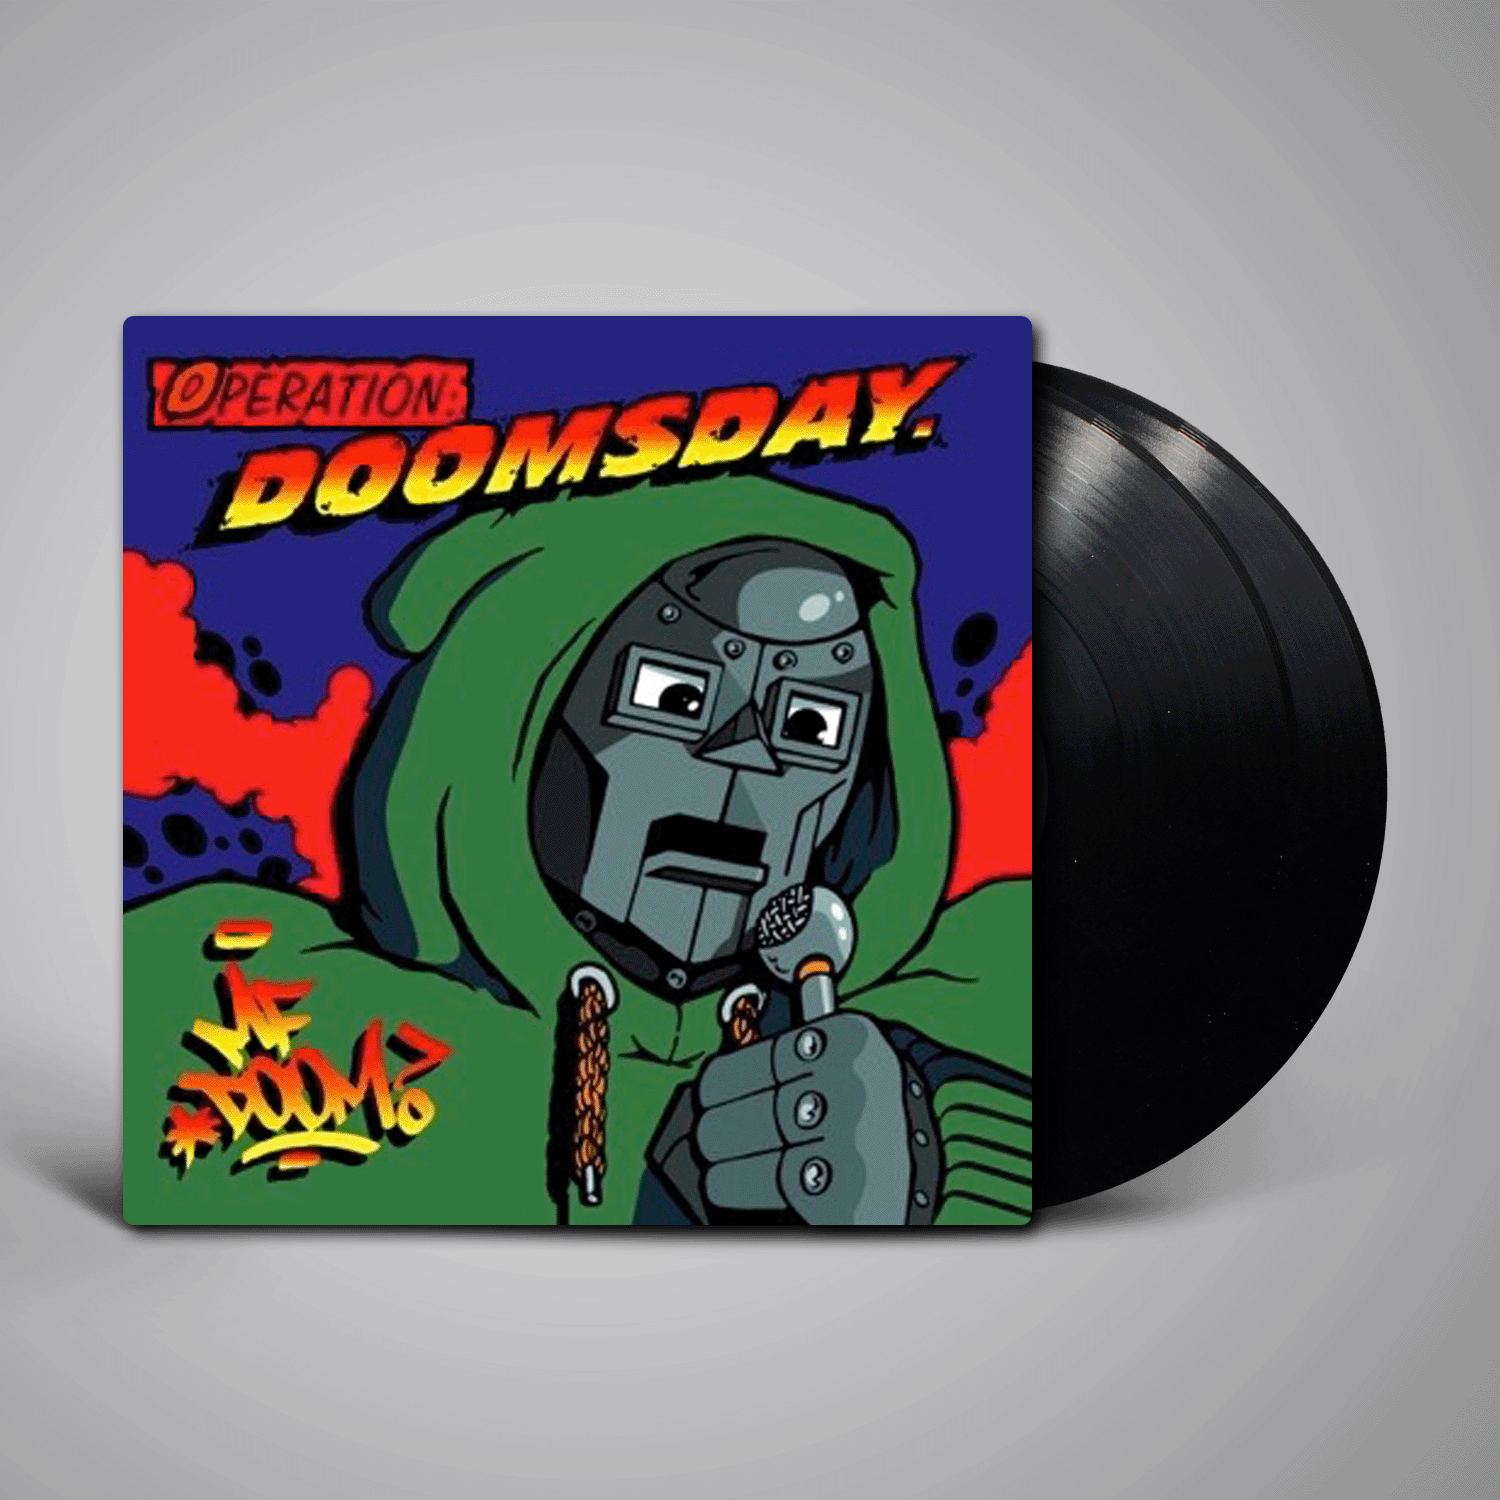 Doomsday - MF Doom 